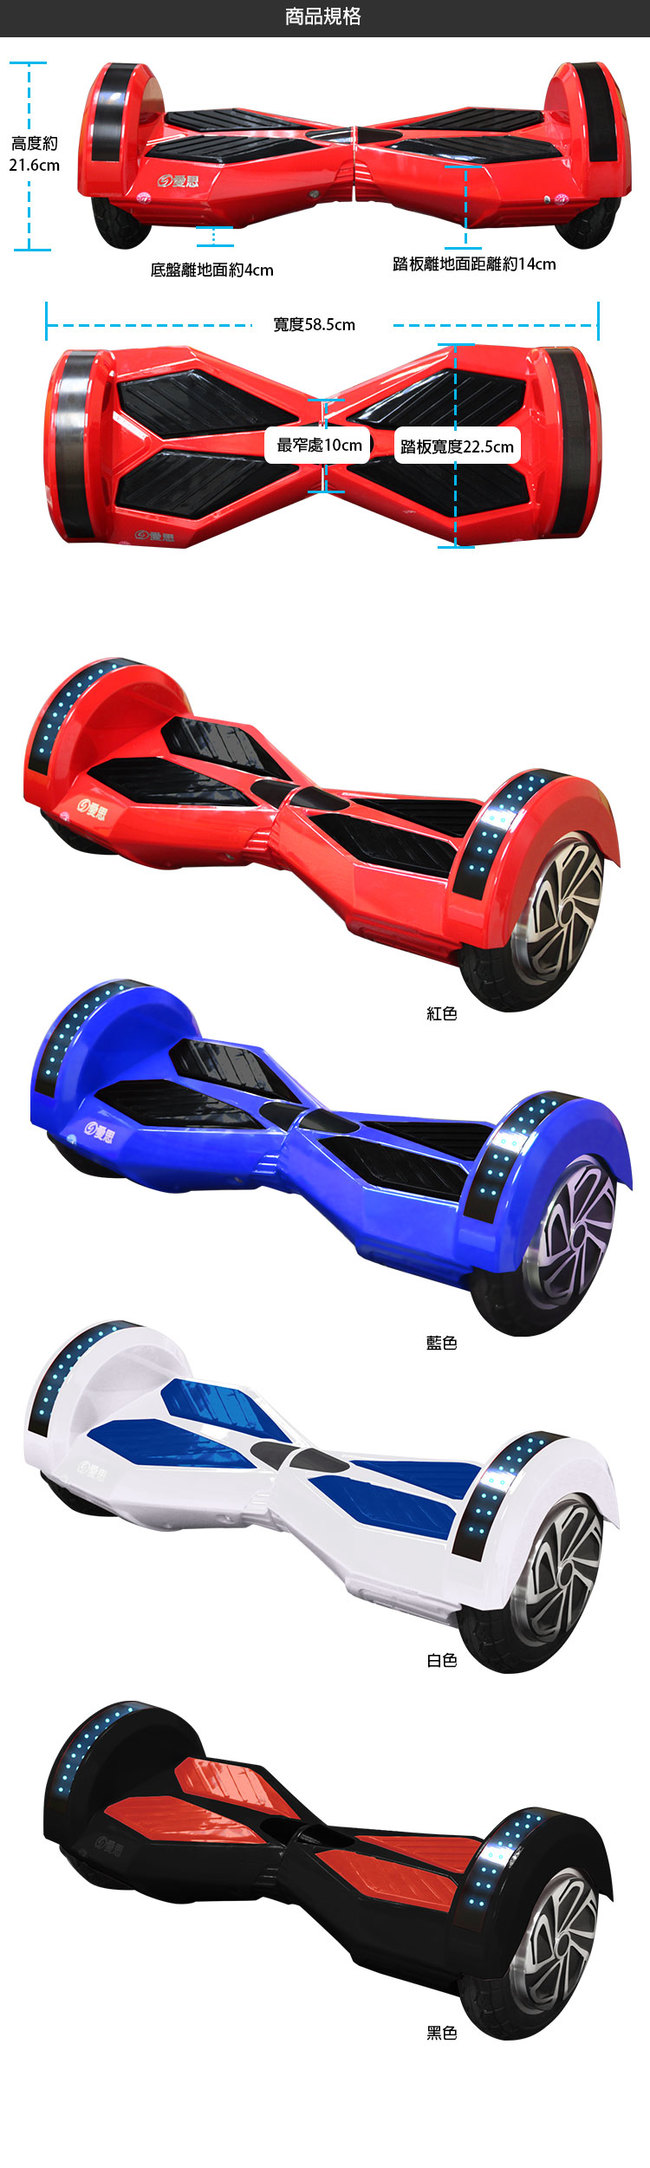 IS愛思 8S 跑車款8吋智慧體感電動平衡車